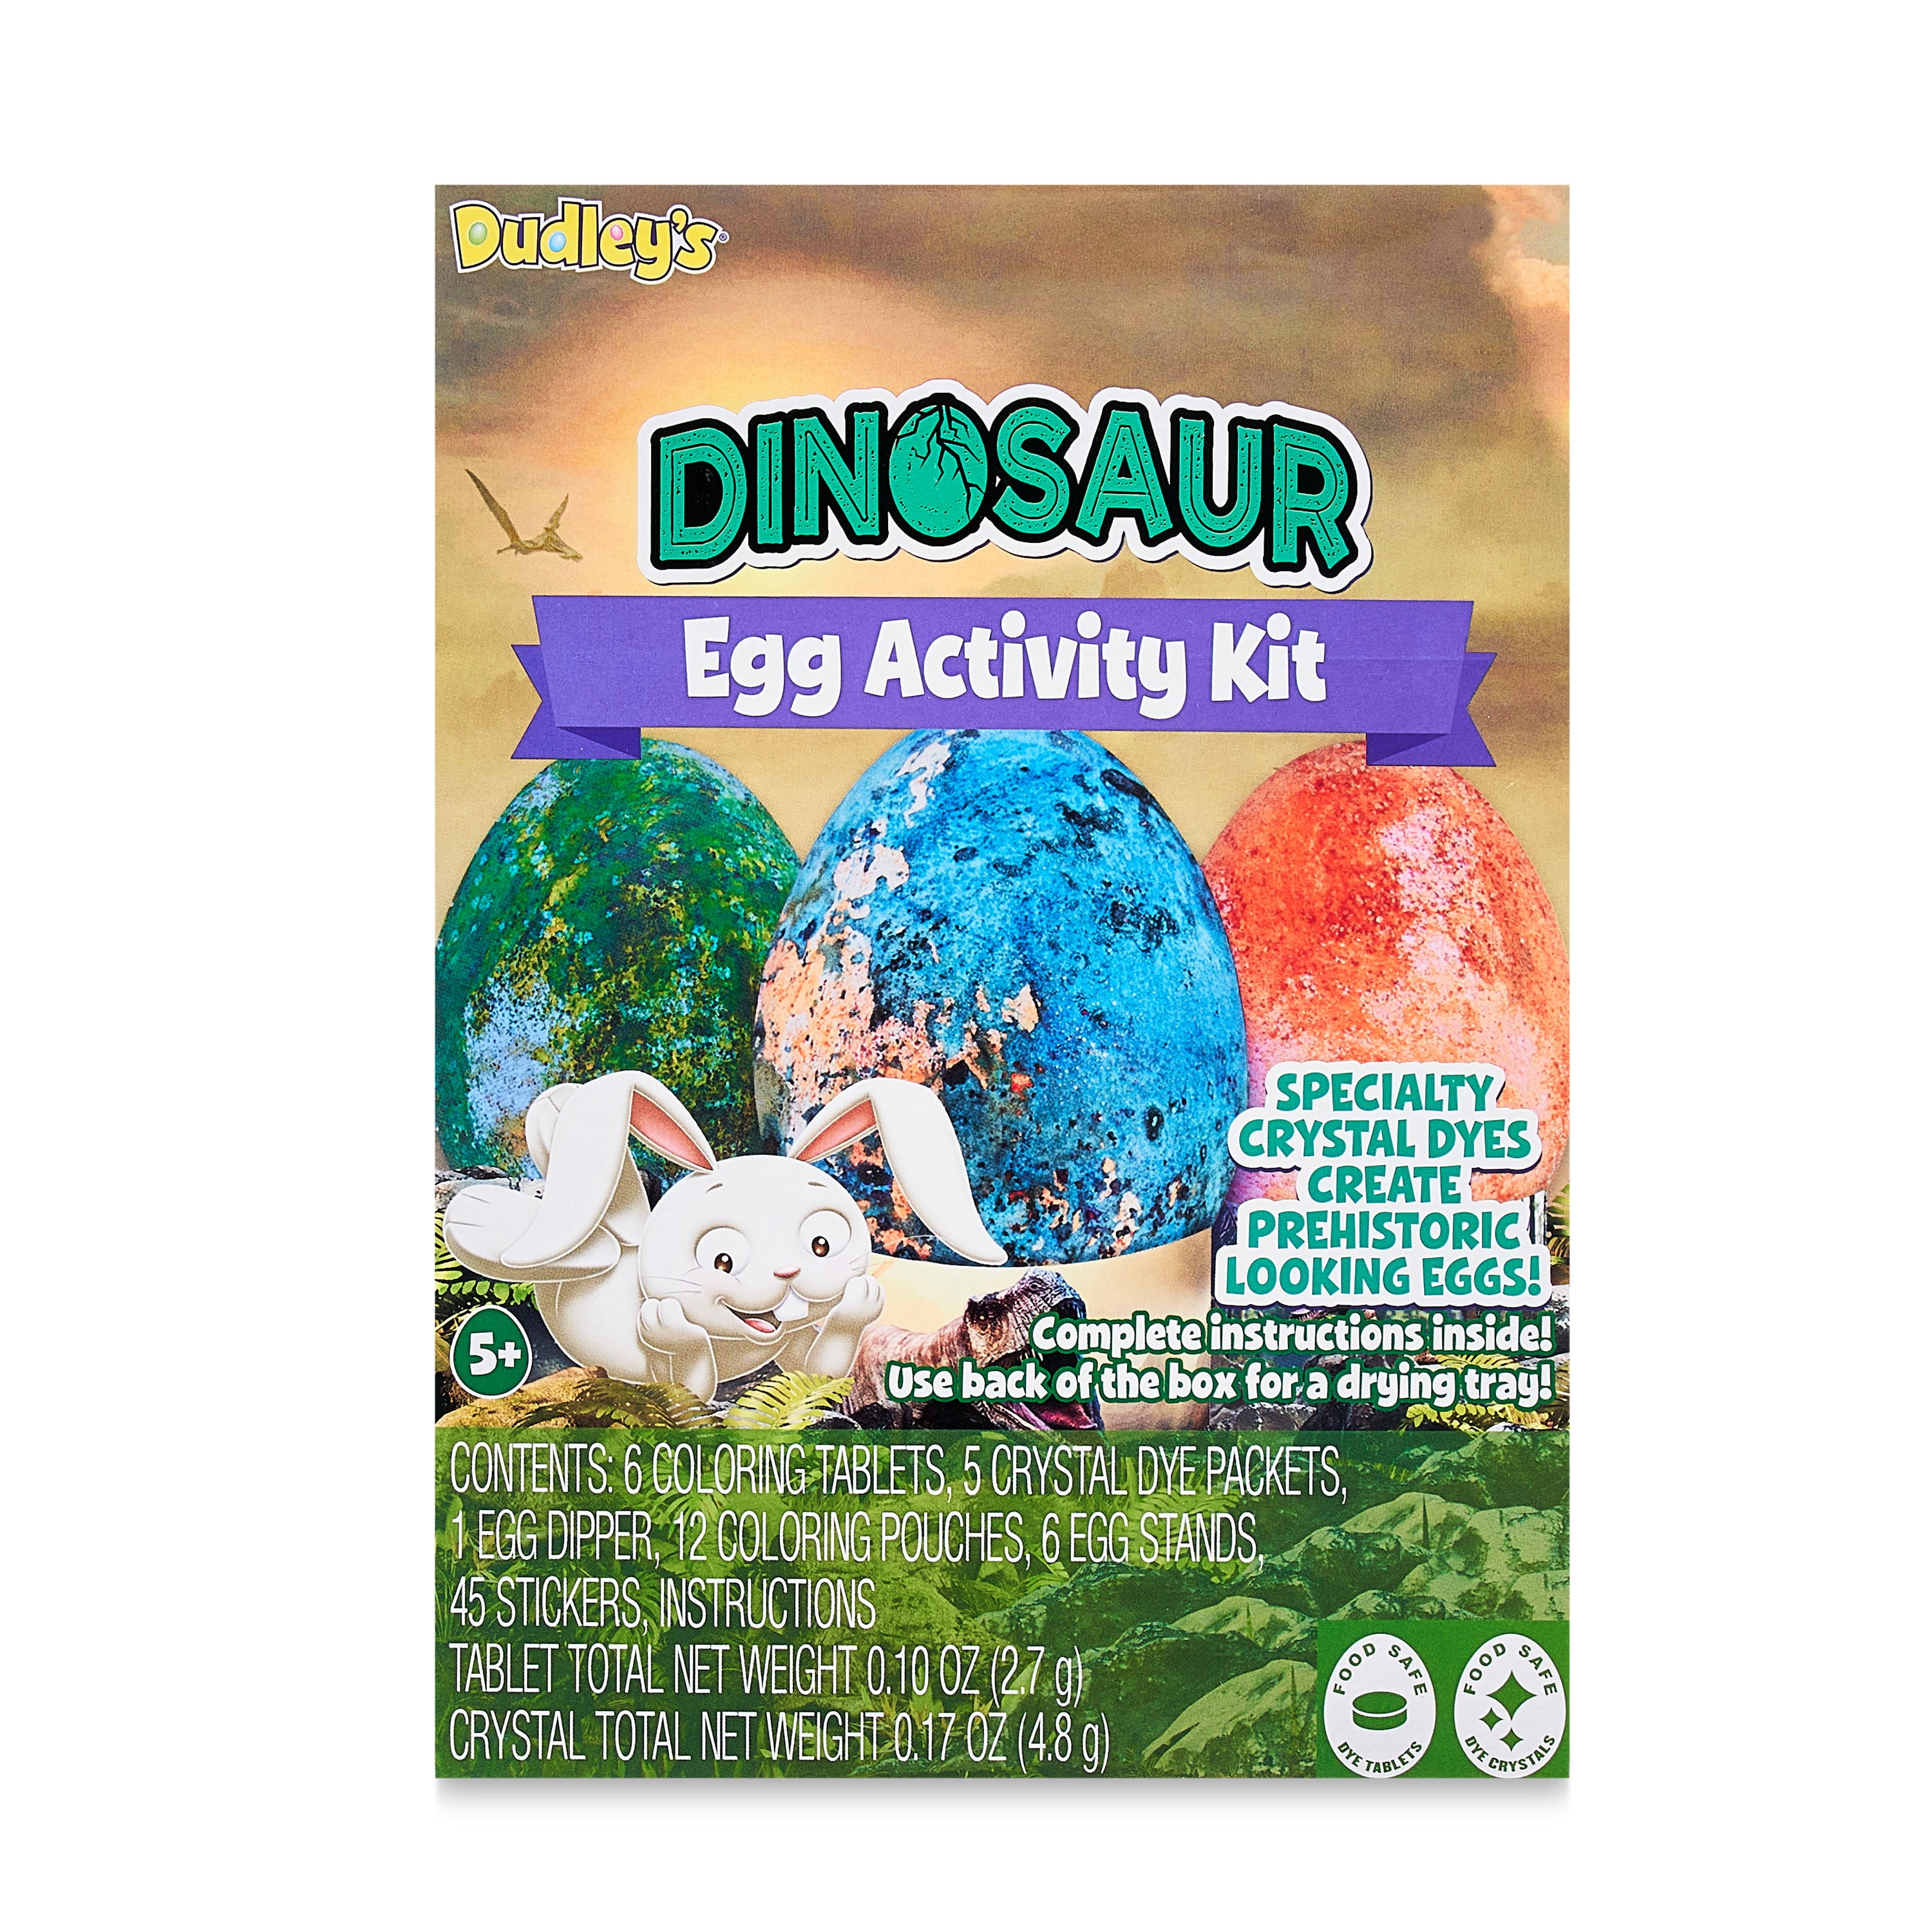 Dudley's Dinosaur Easter Egg Decorating Kit, Creates Prehistoric Looking Eggs